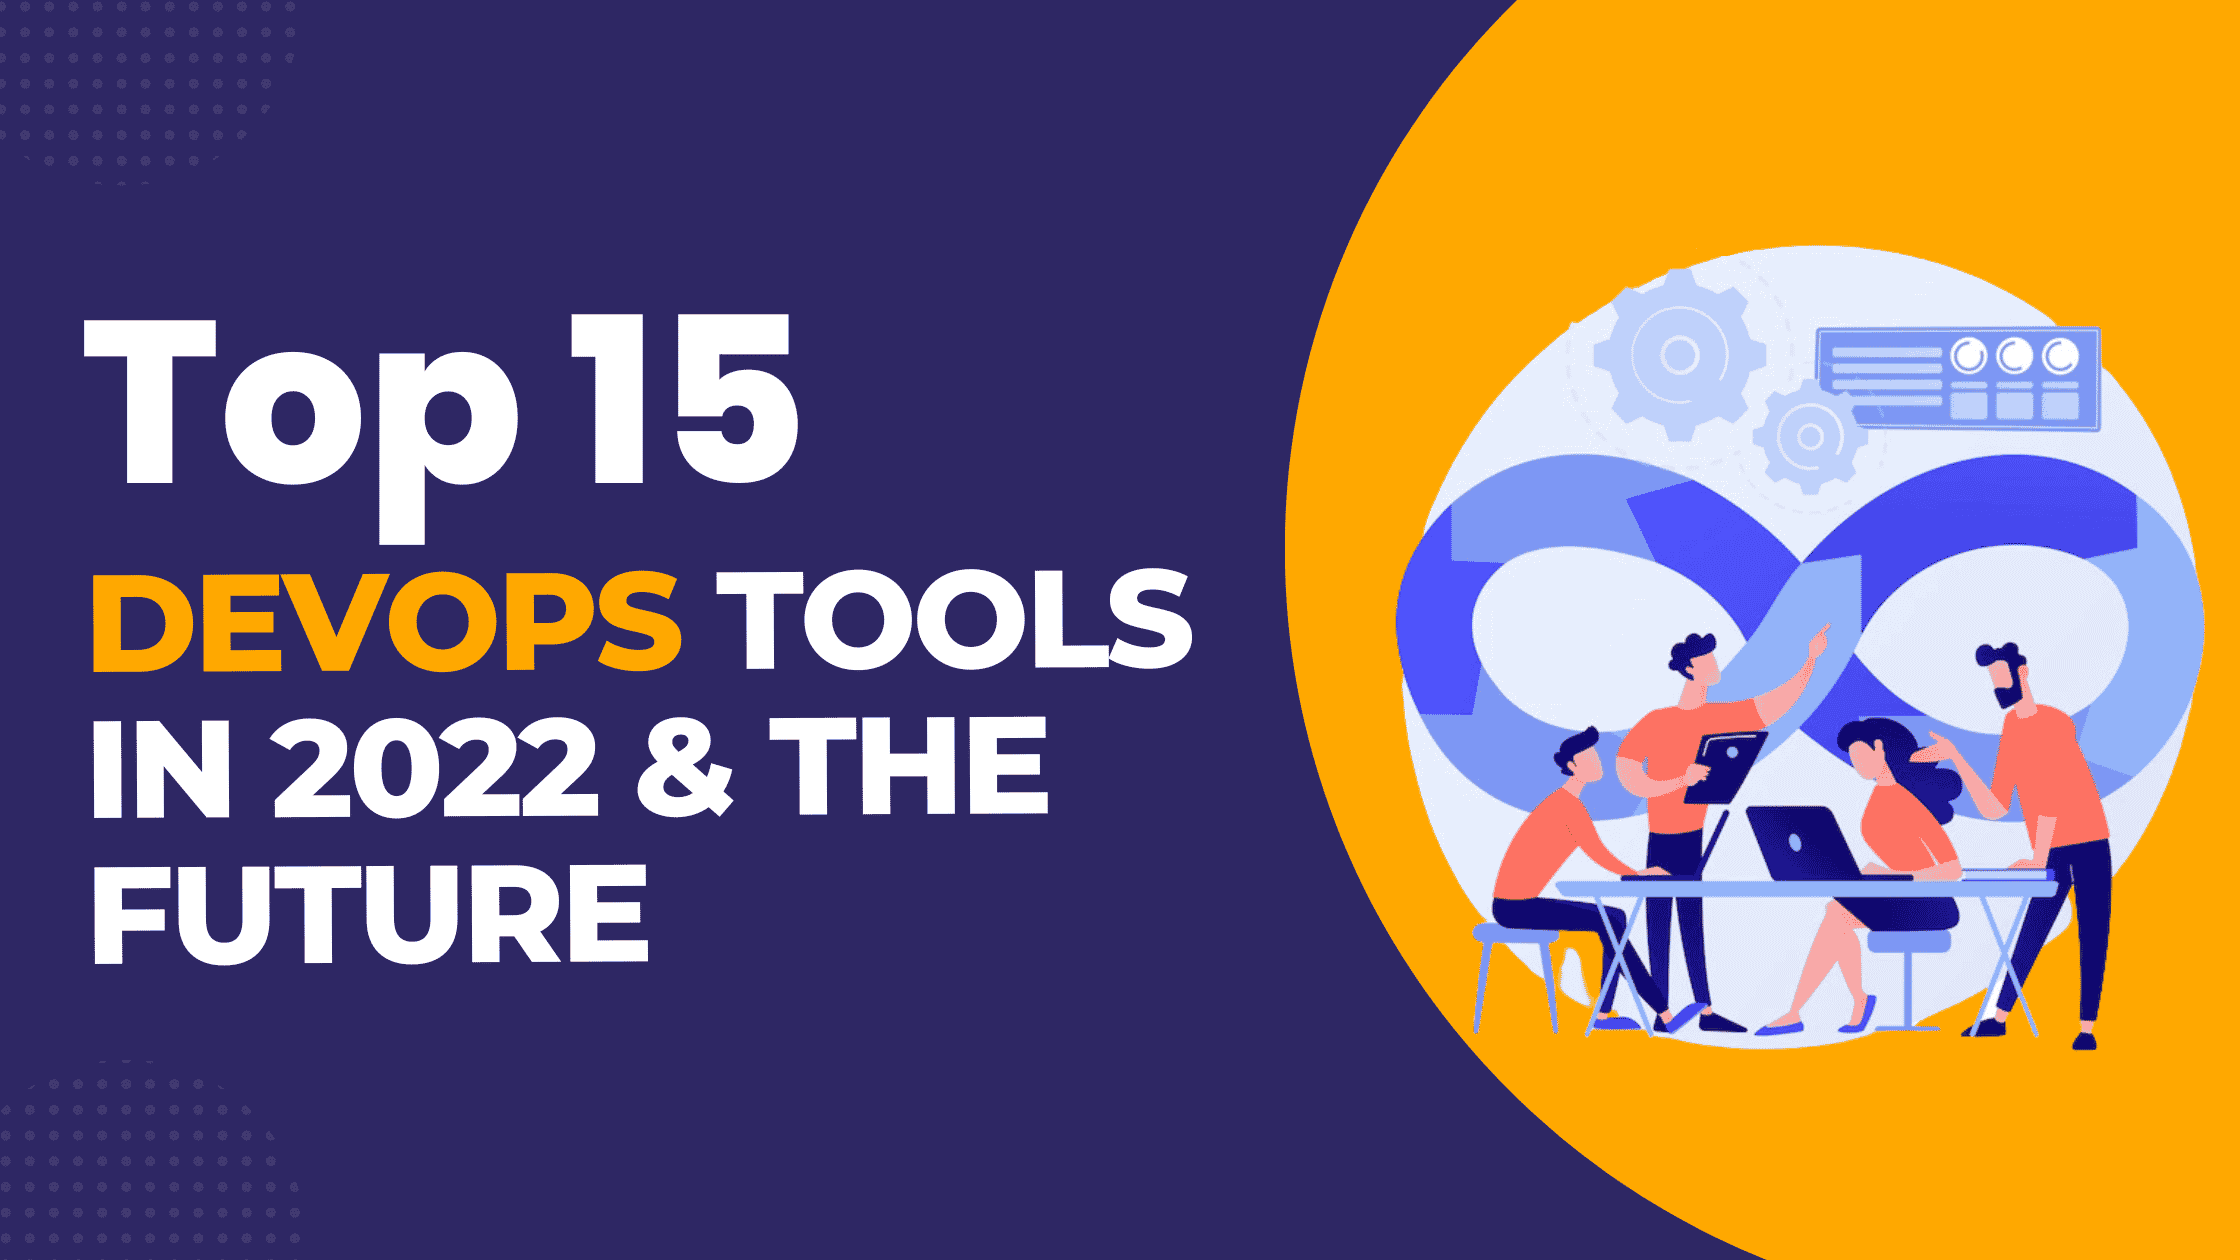 Top 15 Devops tools